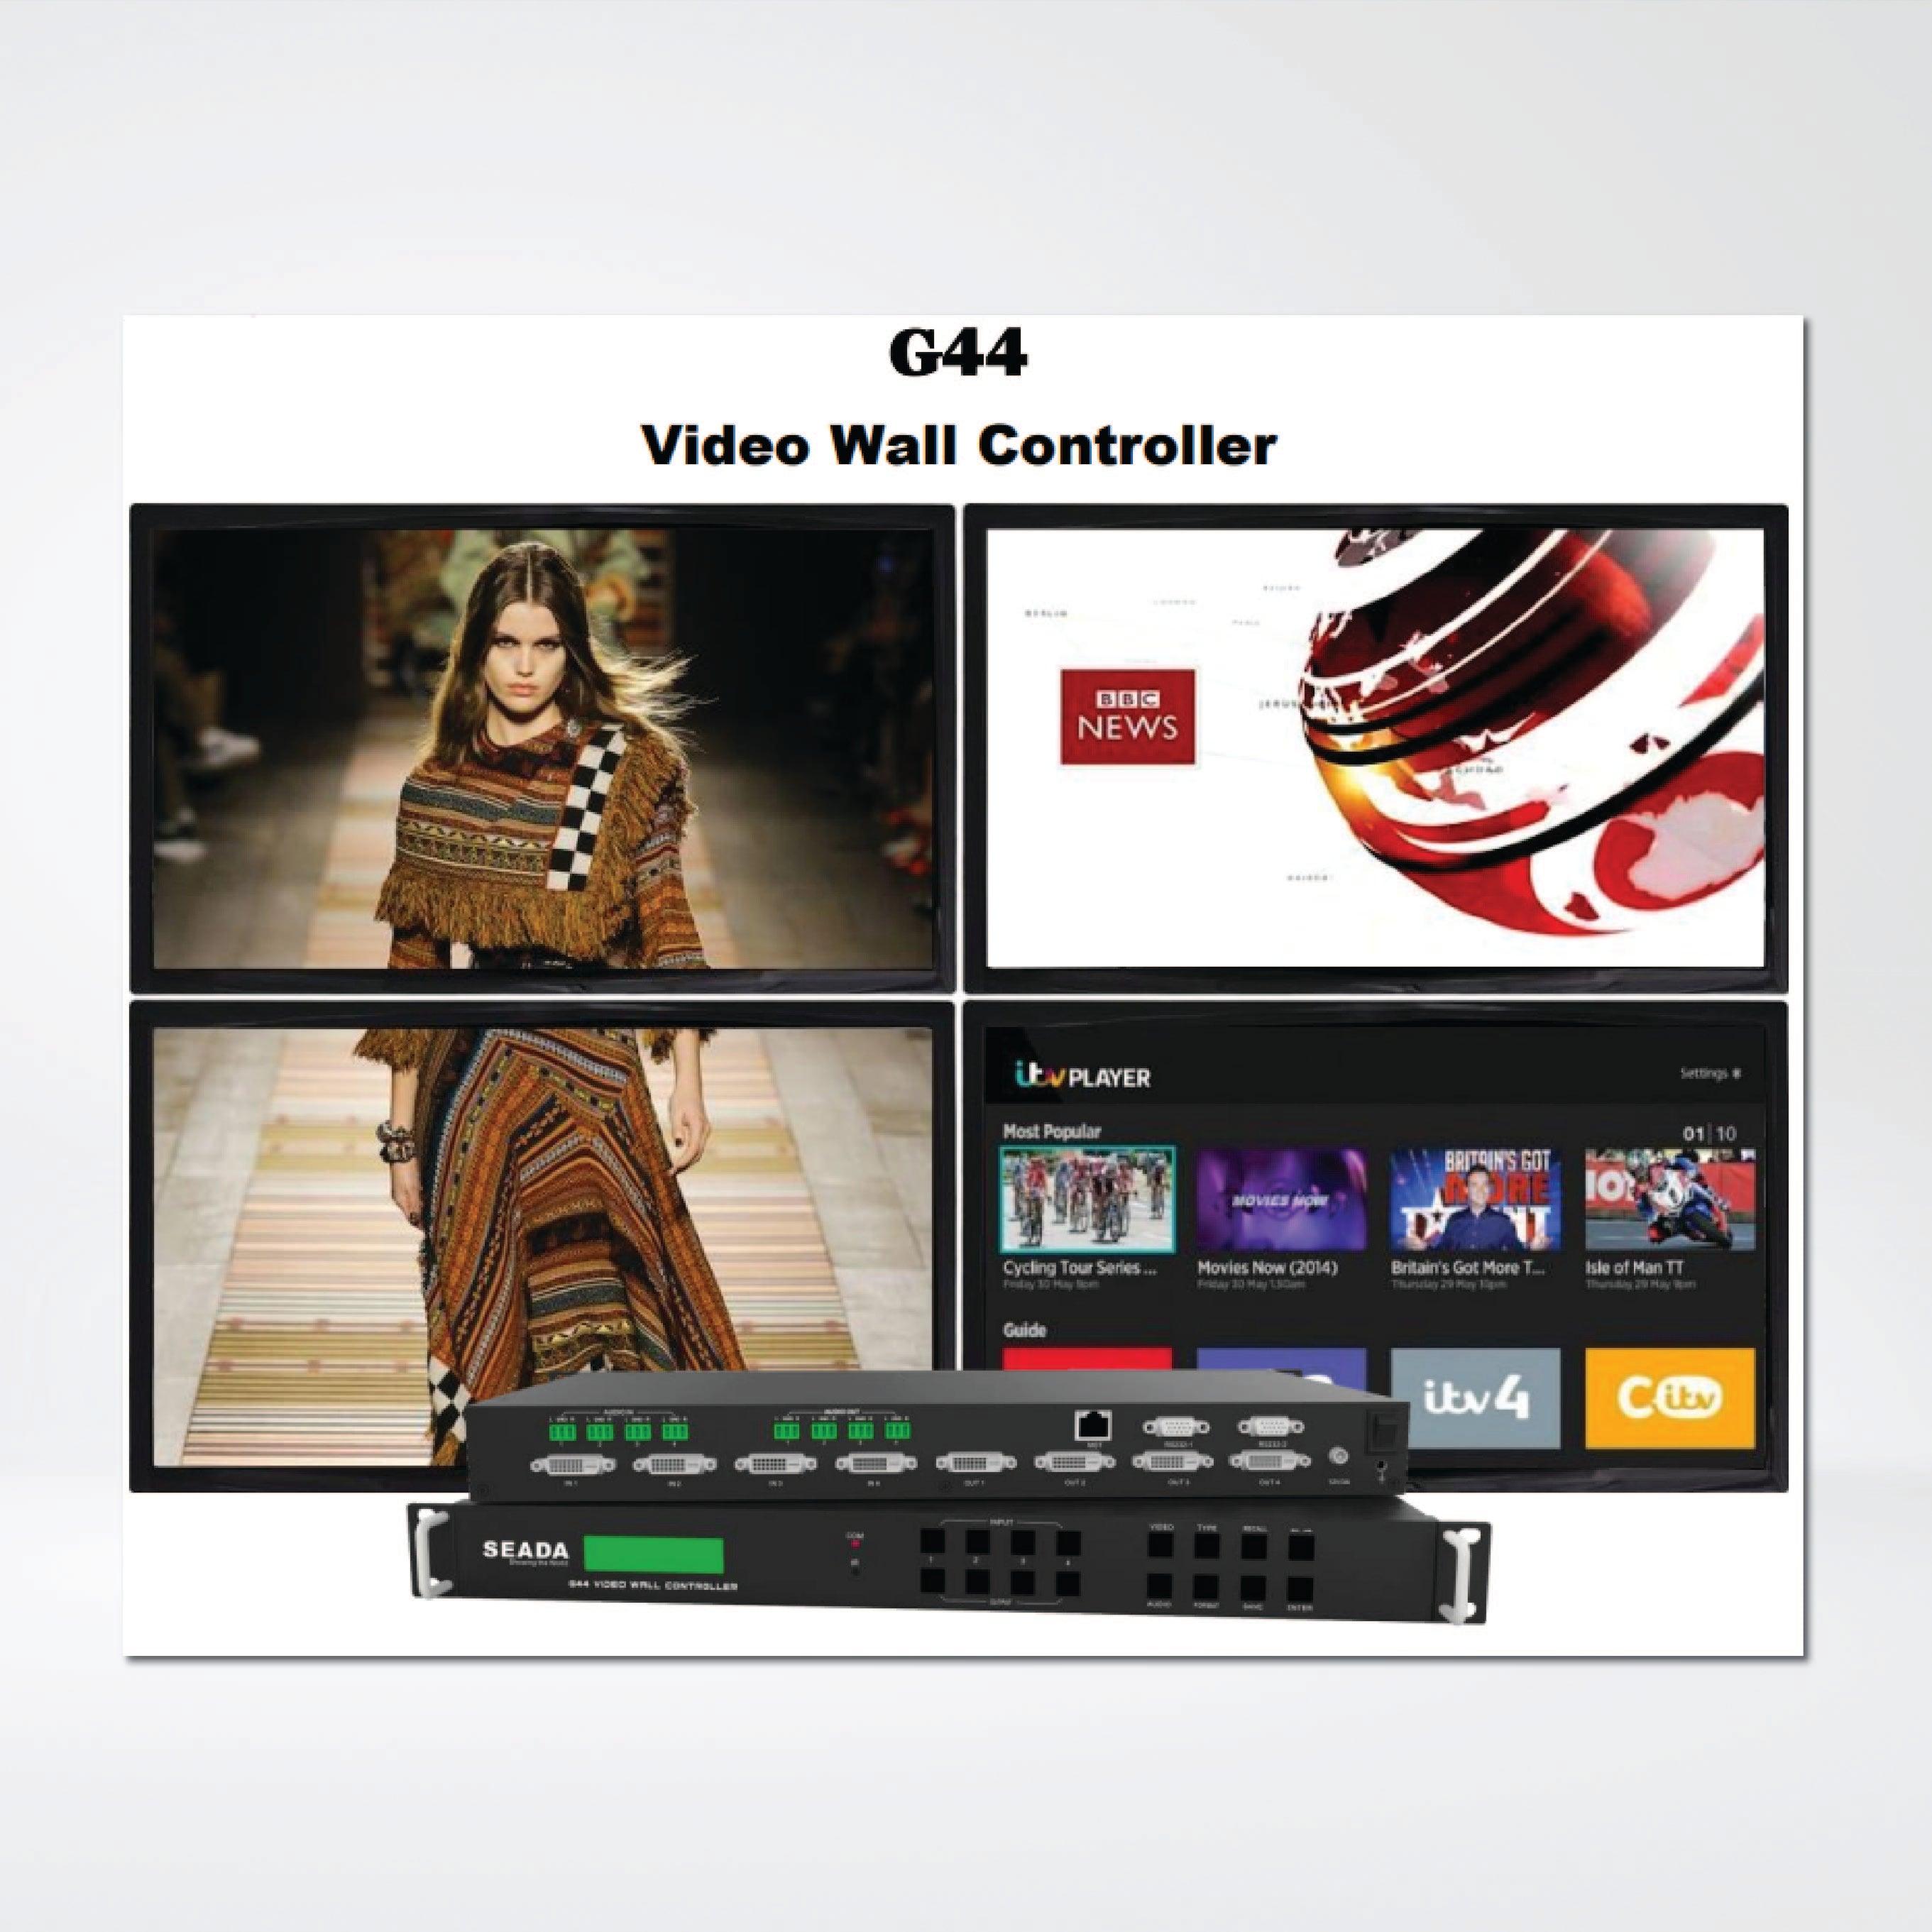 G44-DVI Up to 4 HDMI/DVI/VGA/CVBS/YPbPr inputs ,Resolution up to1080p@60fps. - Riverplus